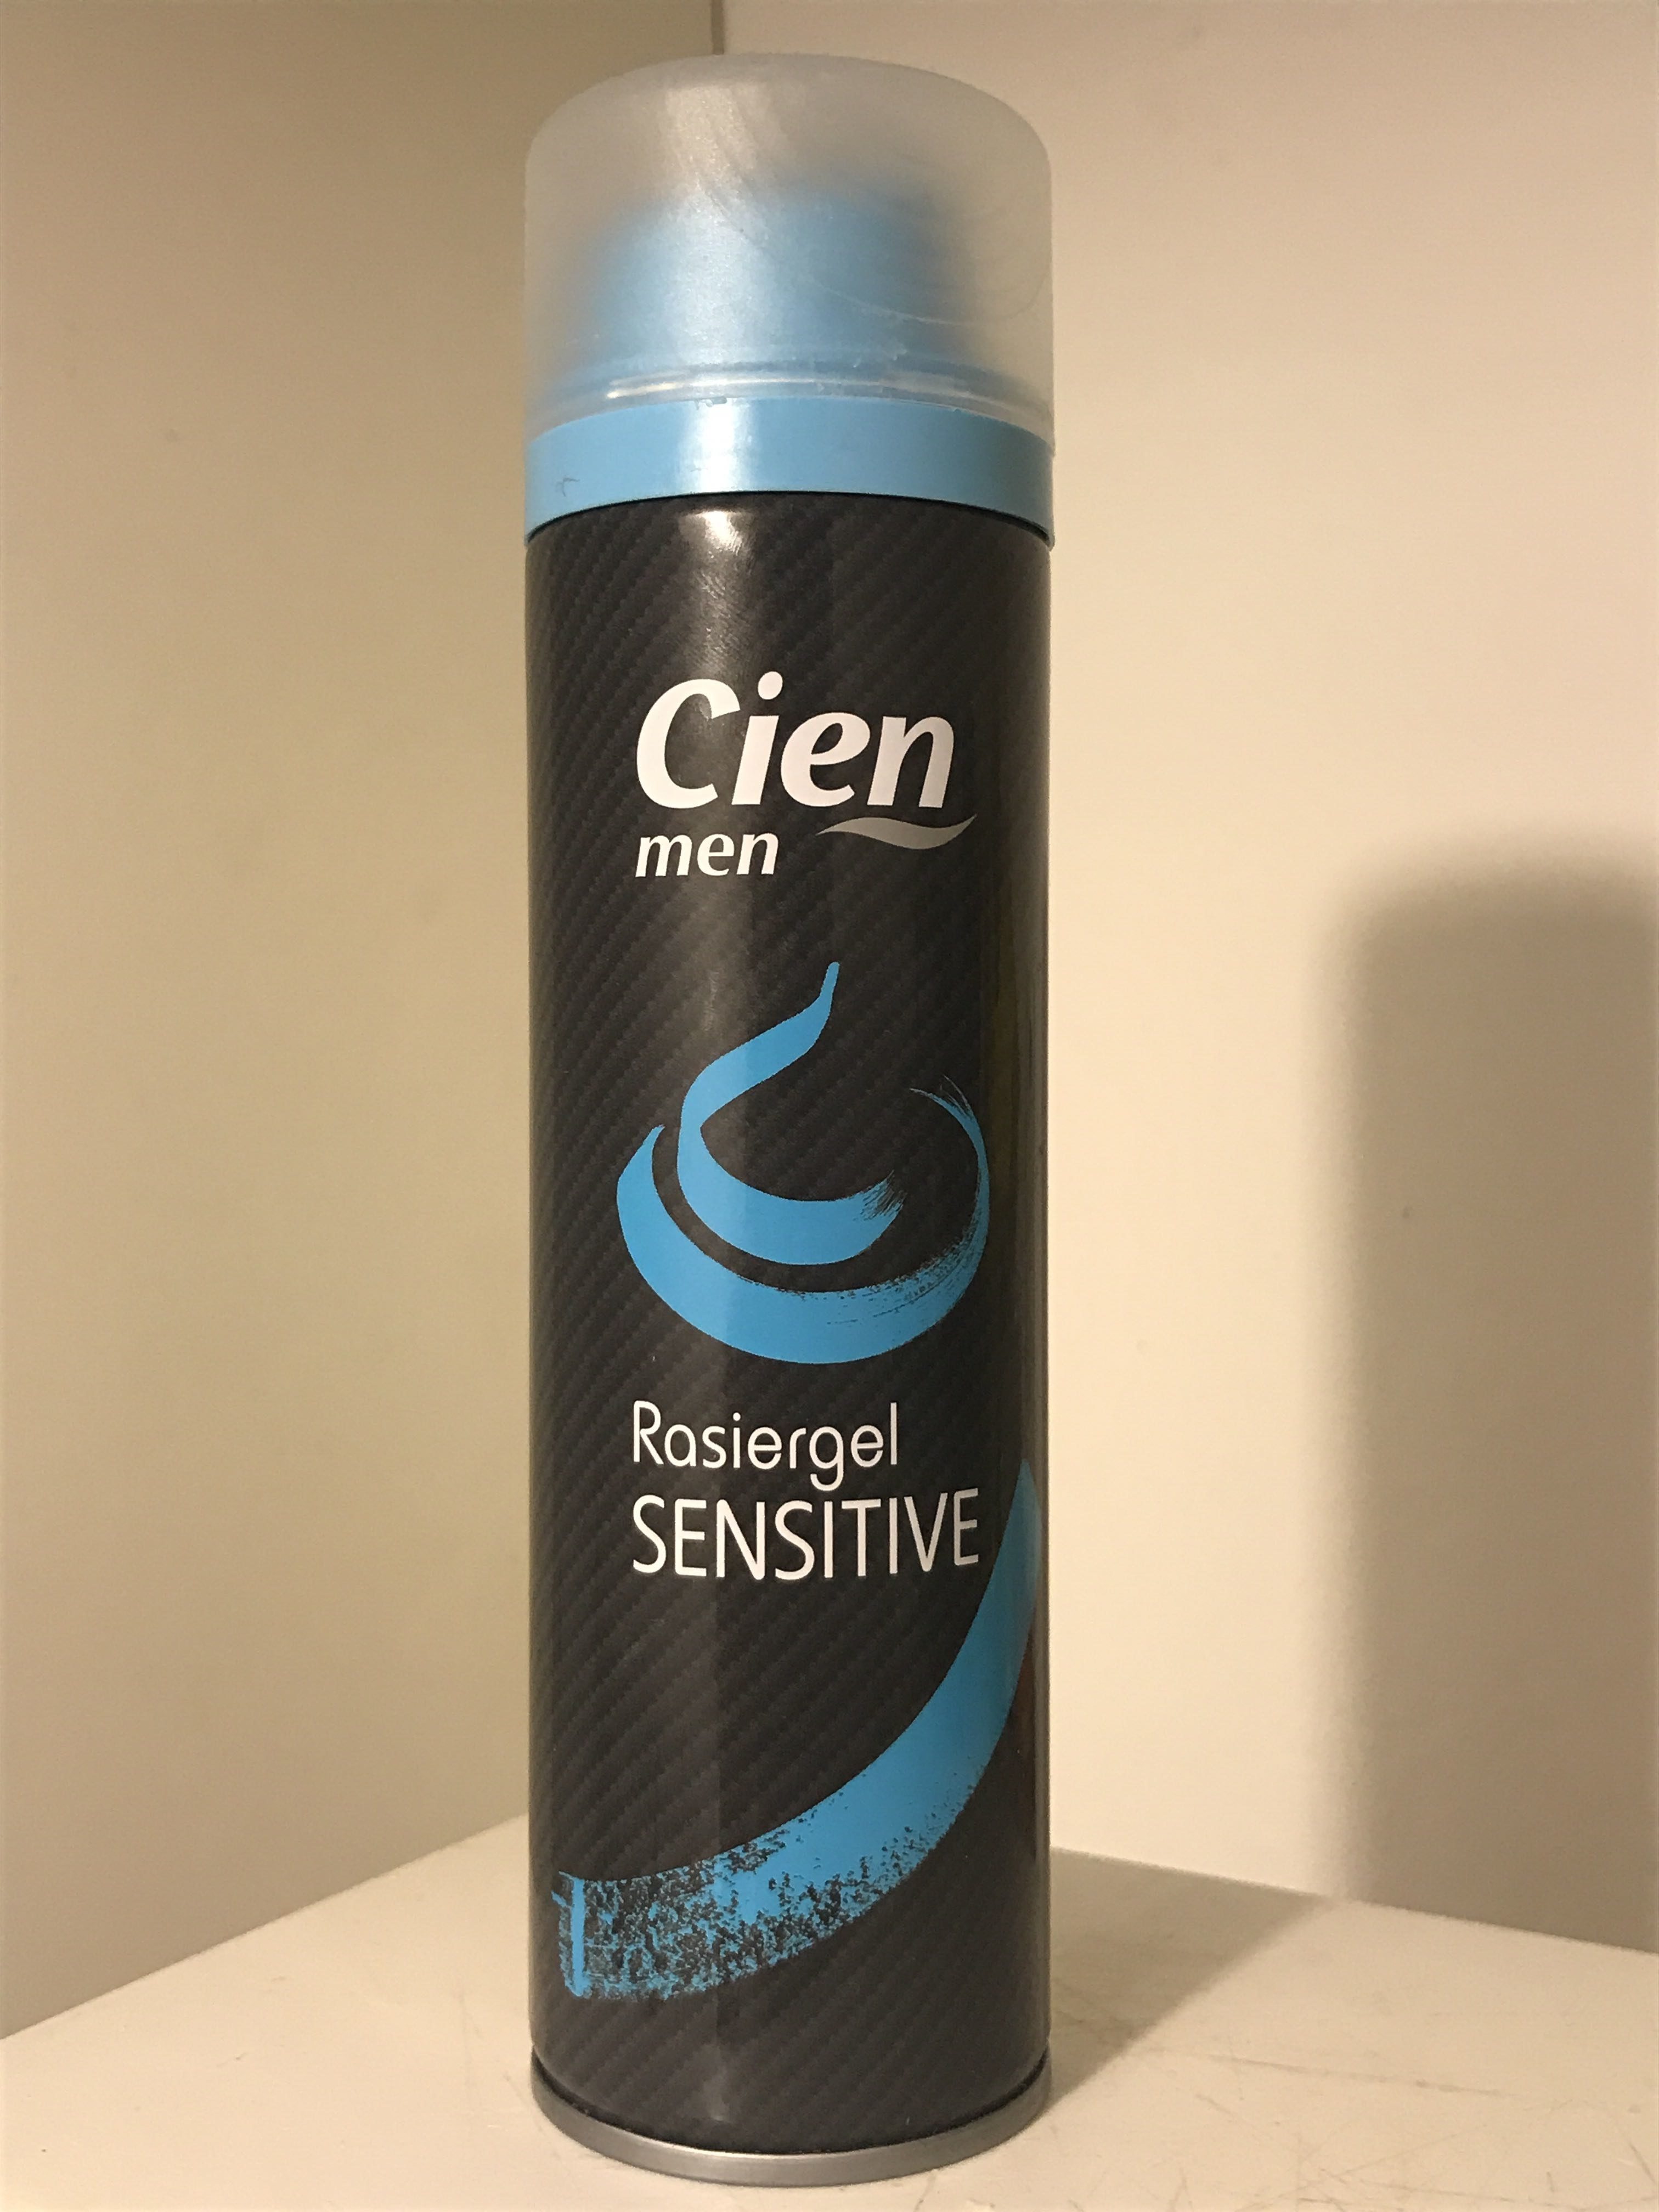 Rasiergel Sensitive - Product - es